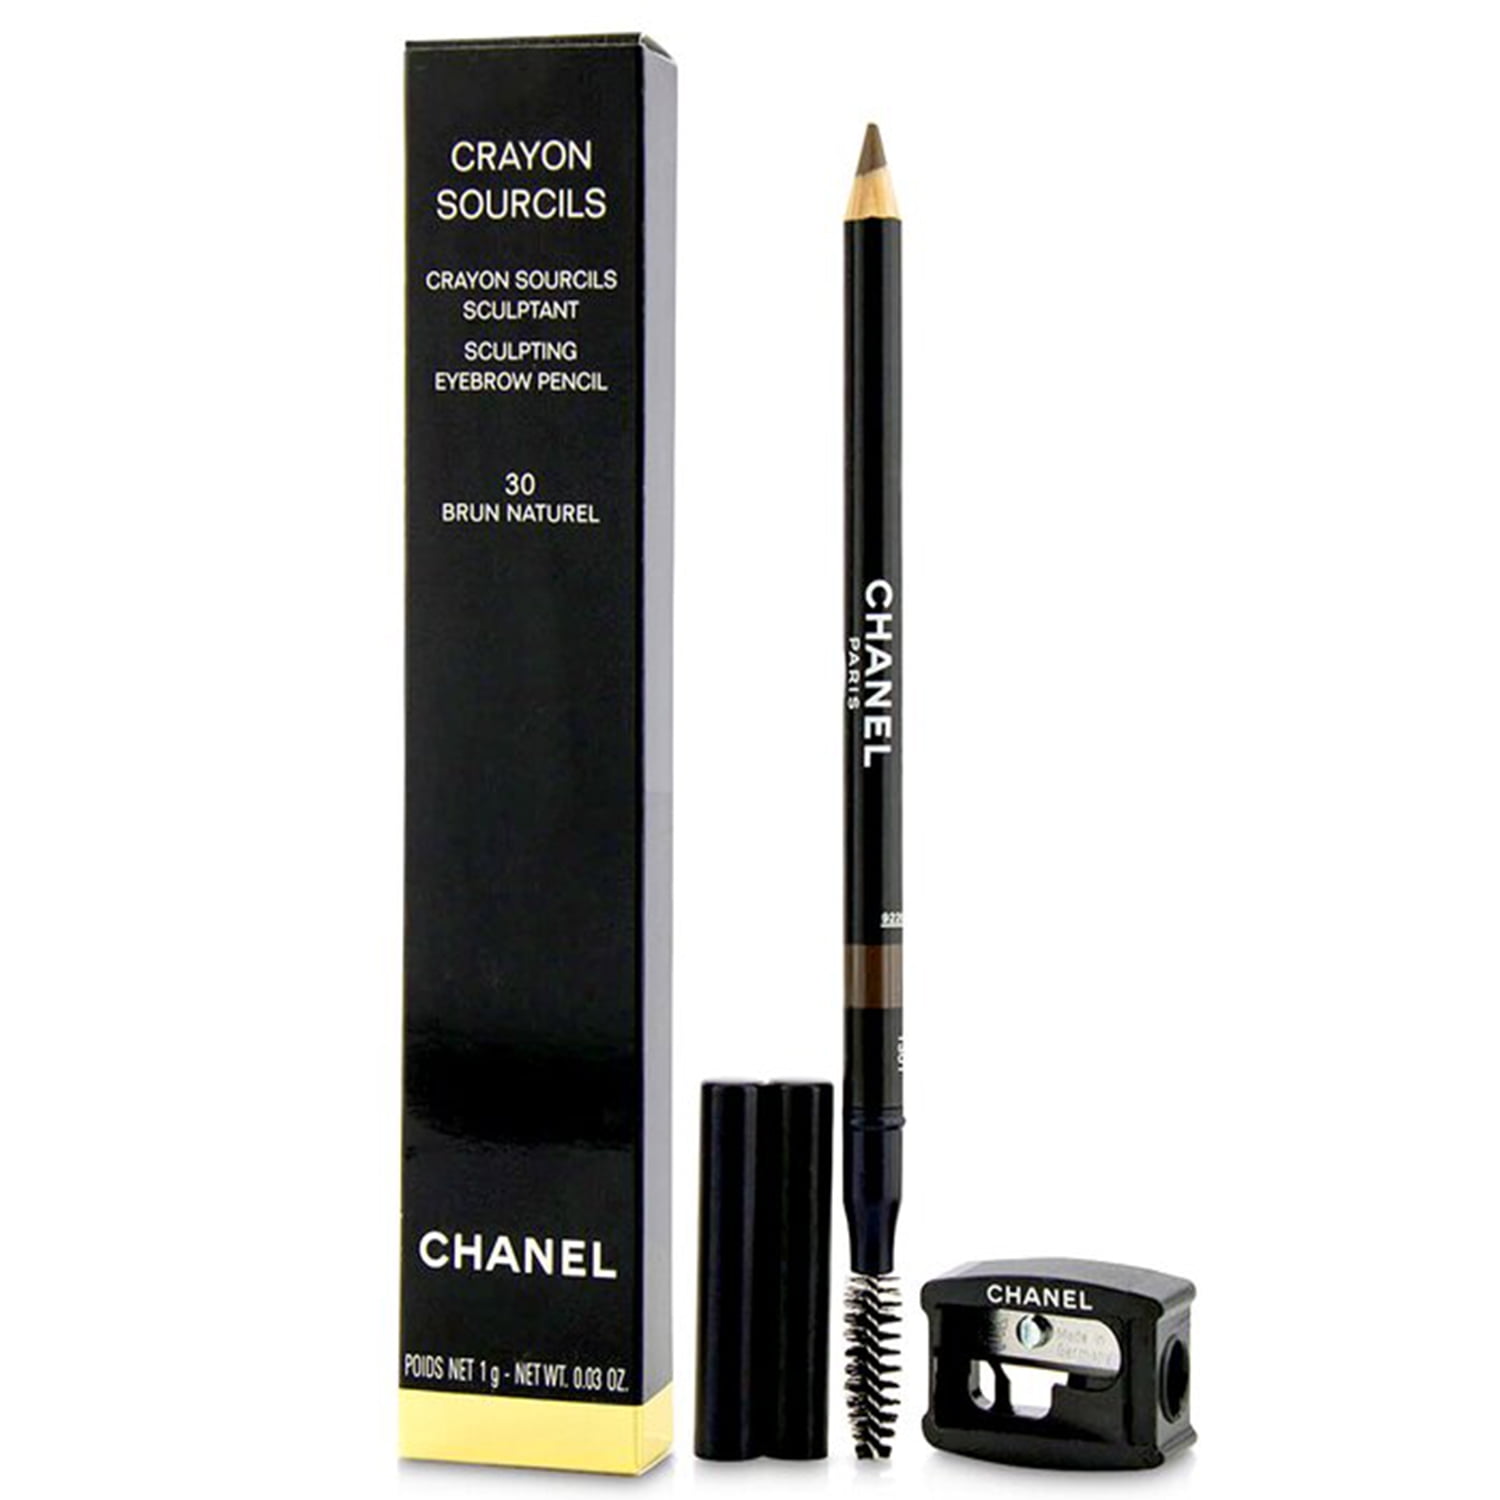 NEW Chanel Crayon Sourcils Sculpting Eyebrow Pencil - # 40 Brun Cendre  0.03oz